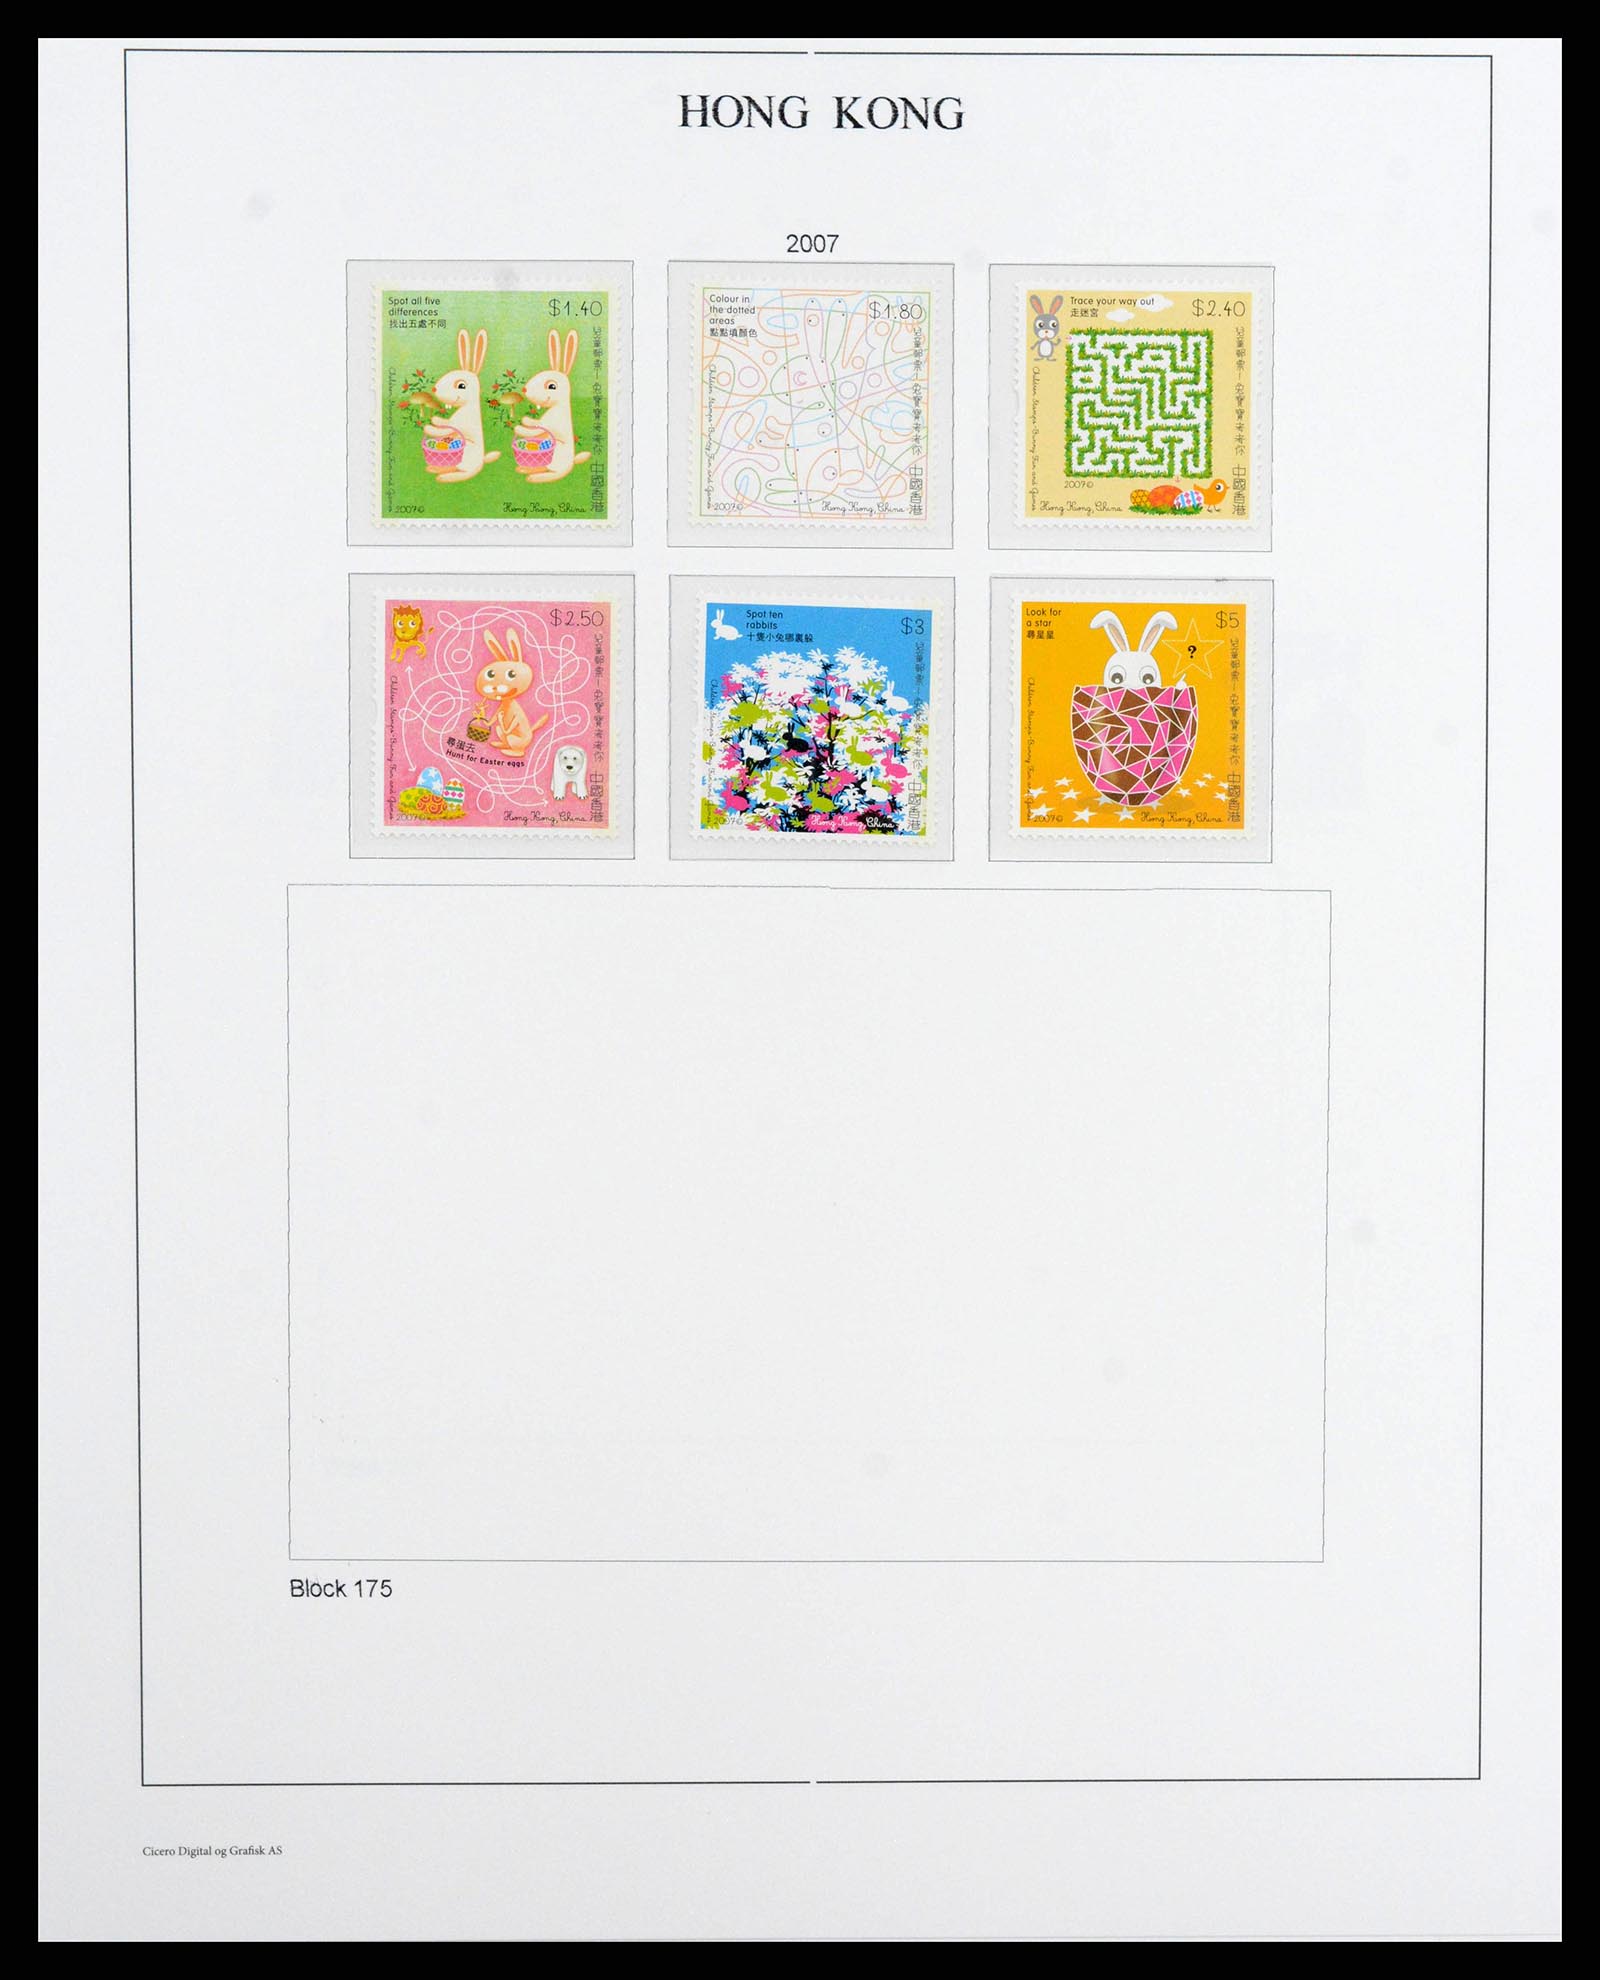 37955 0268 - Stamp collection 37955 Hong Kong supercollection 1862-2007.